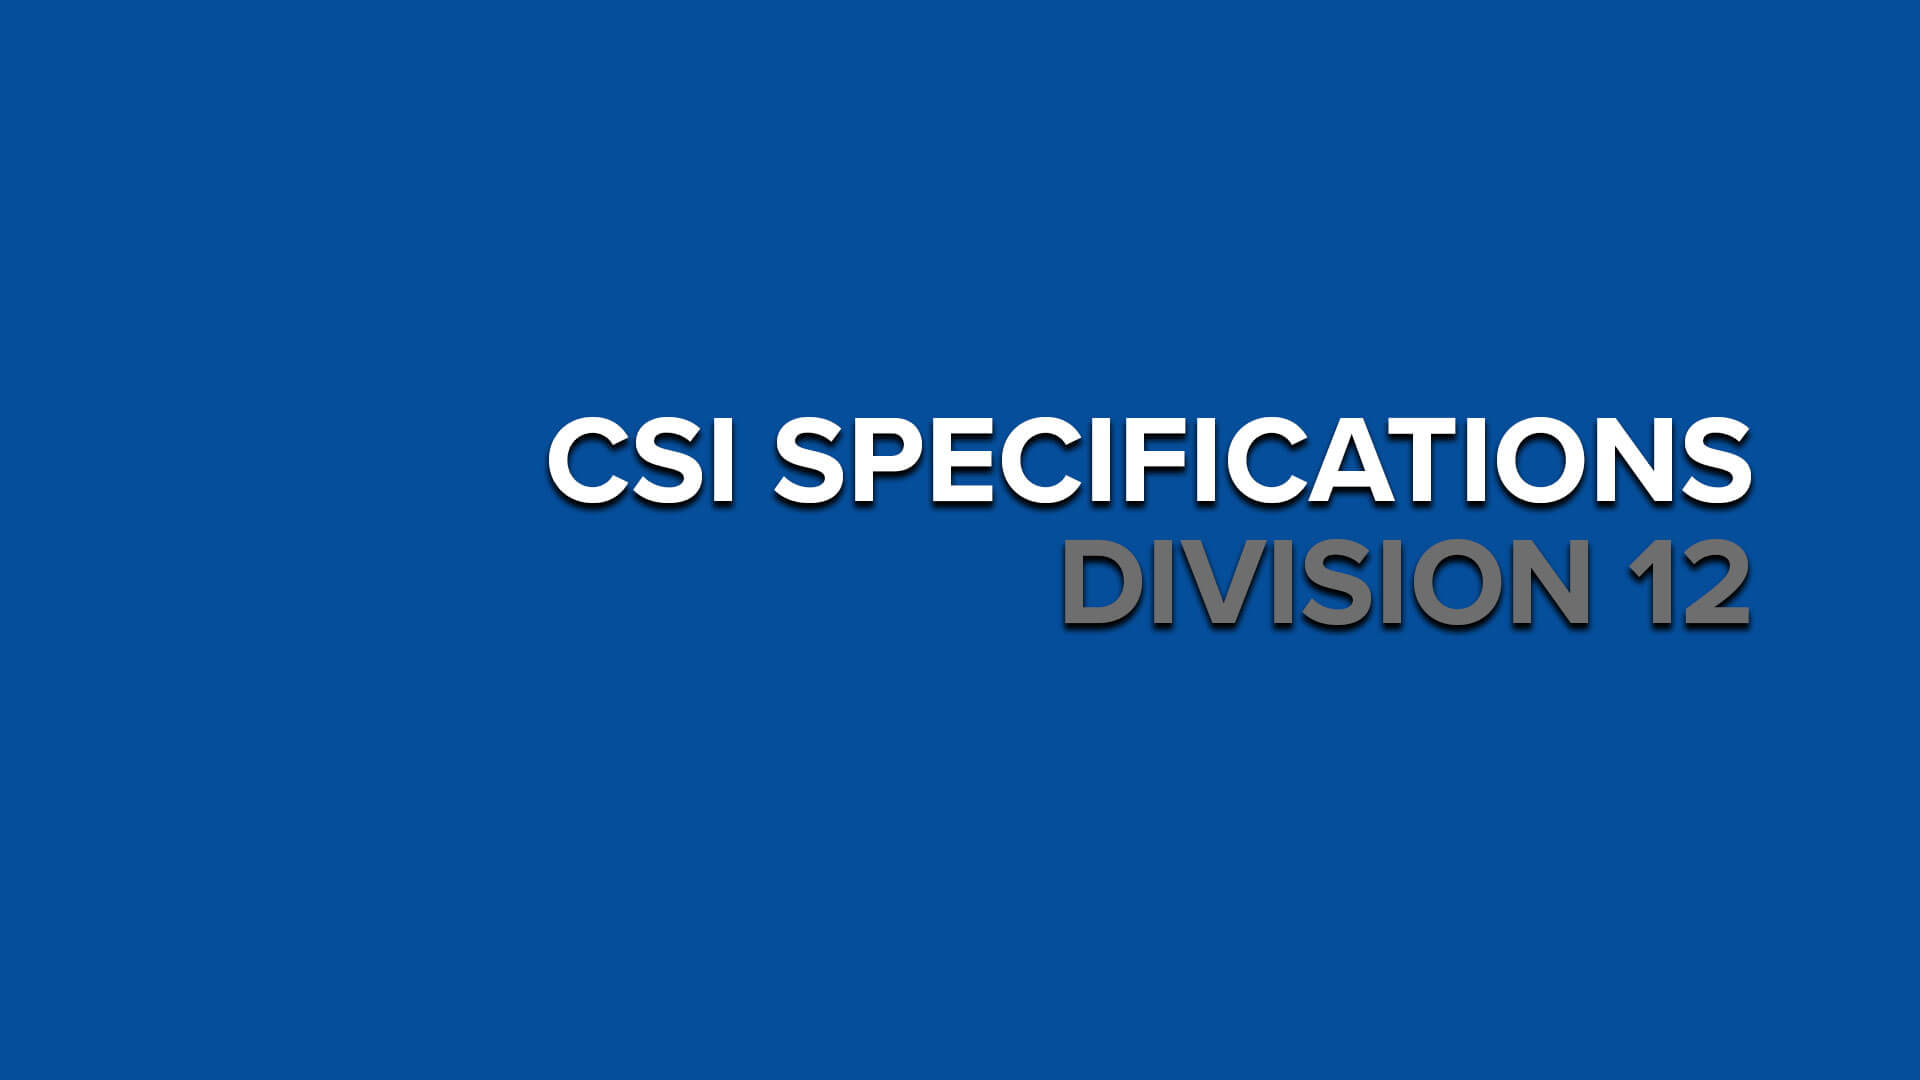 Csi specifications division 12